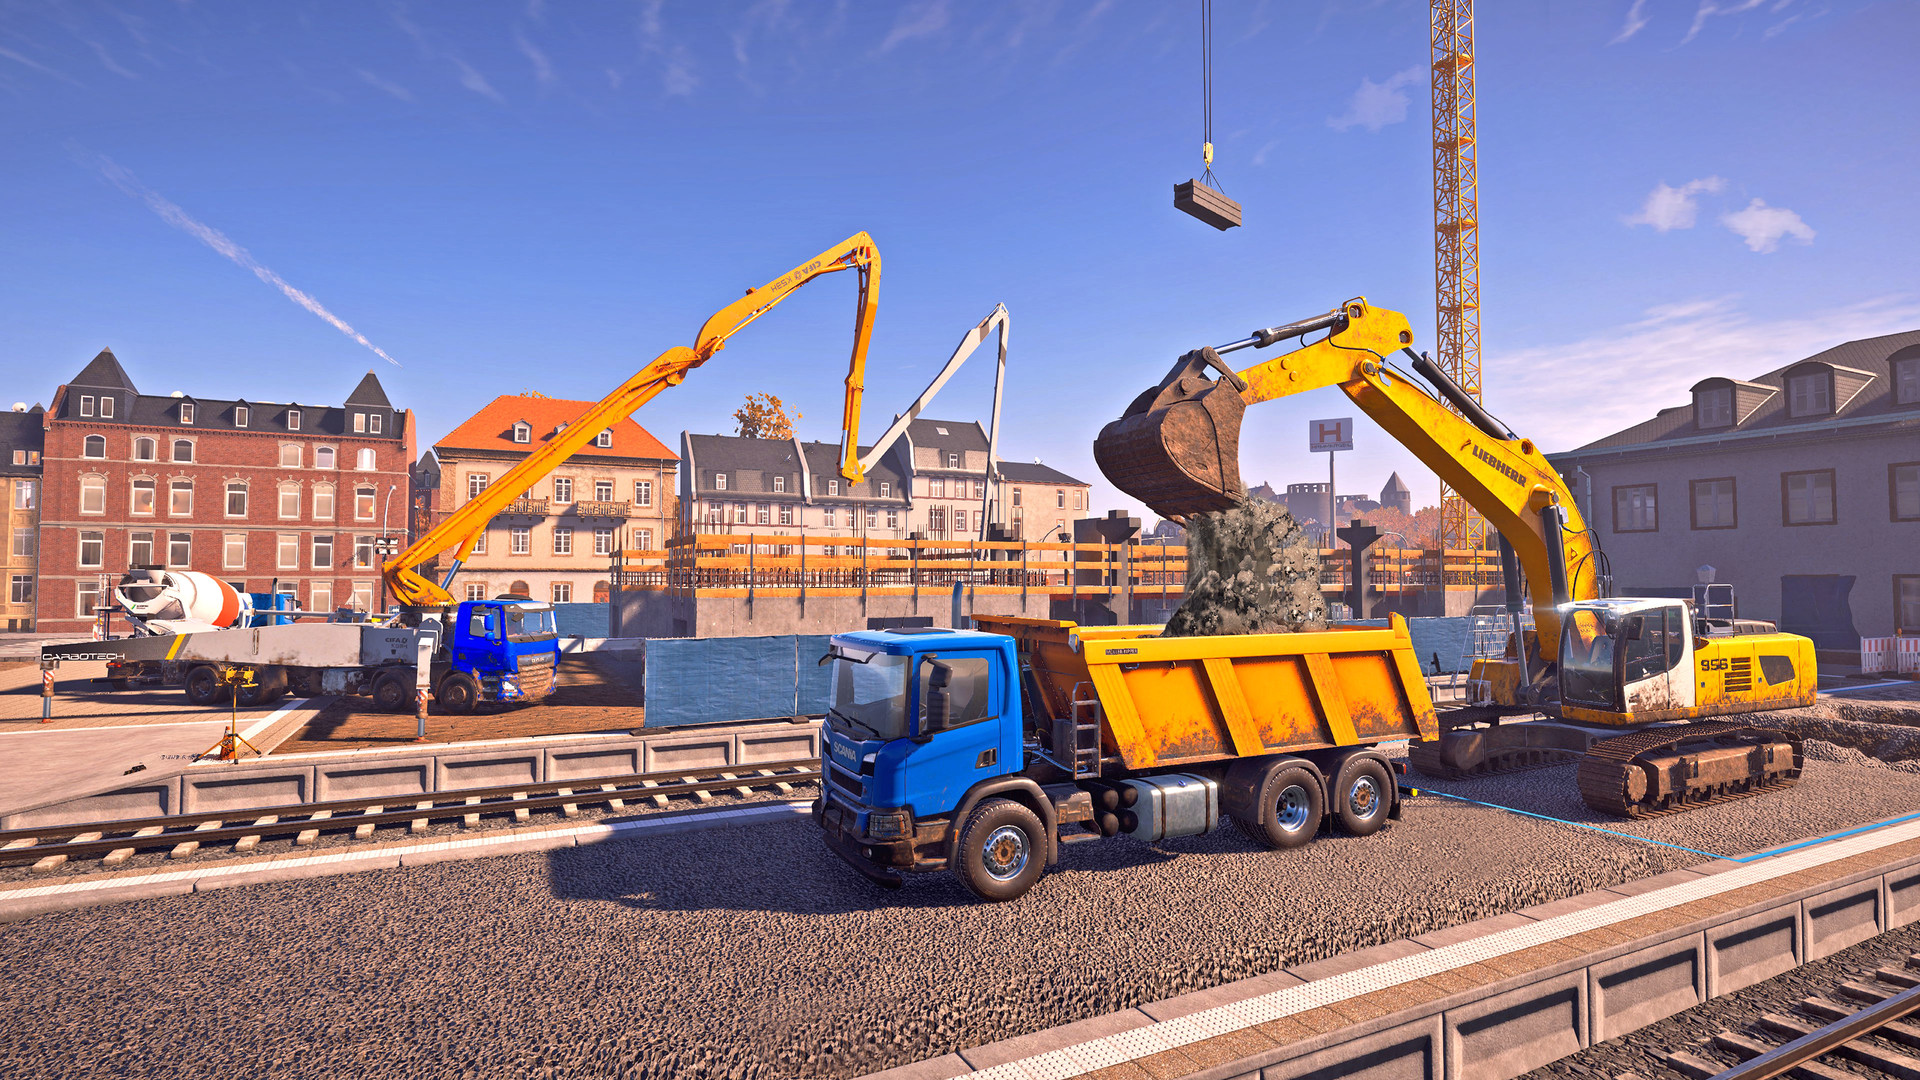 Construction Simulator Extended Edition EU Steam CD Key